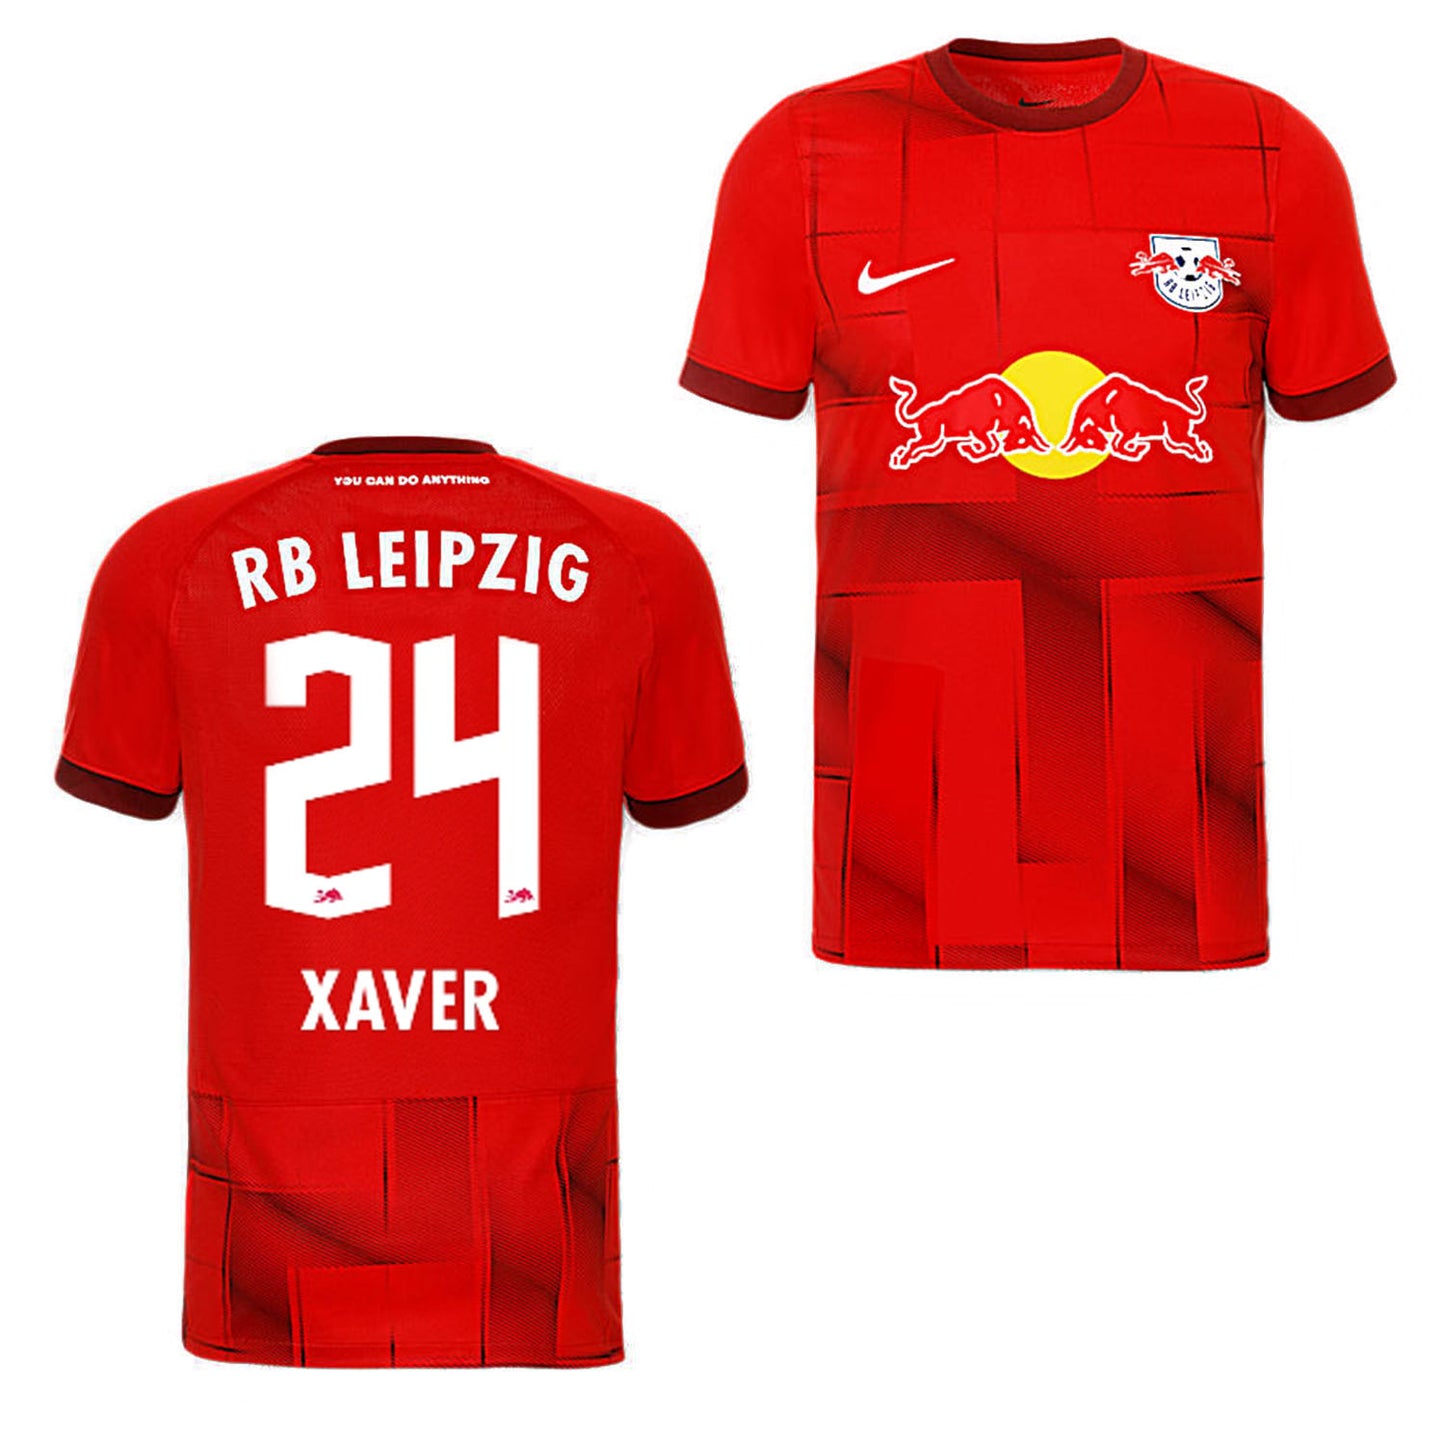 Xaver Schlager RB Leipzig 24 Jersey